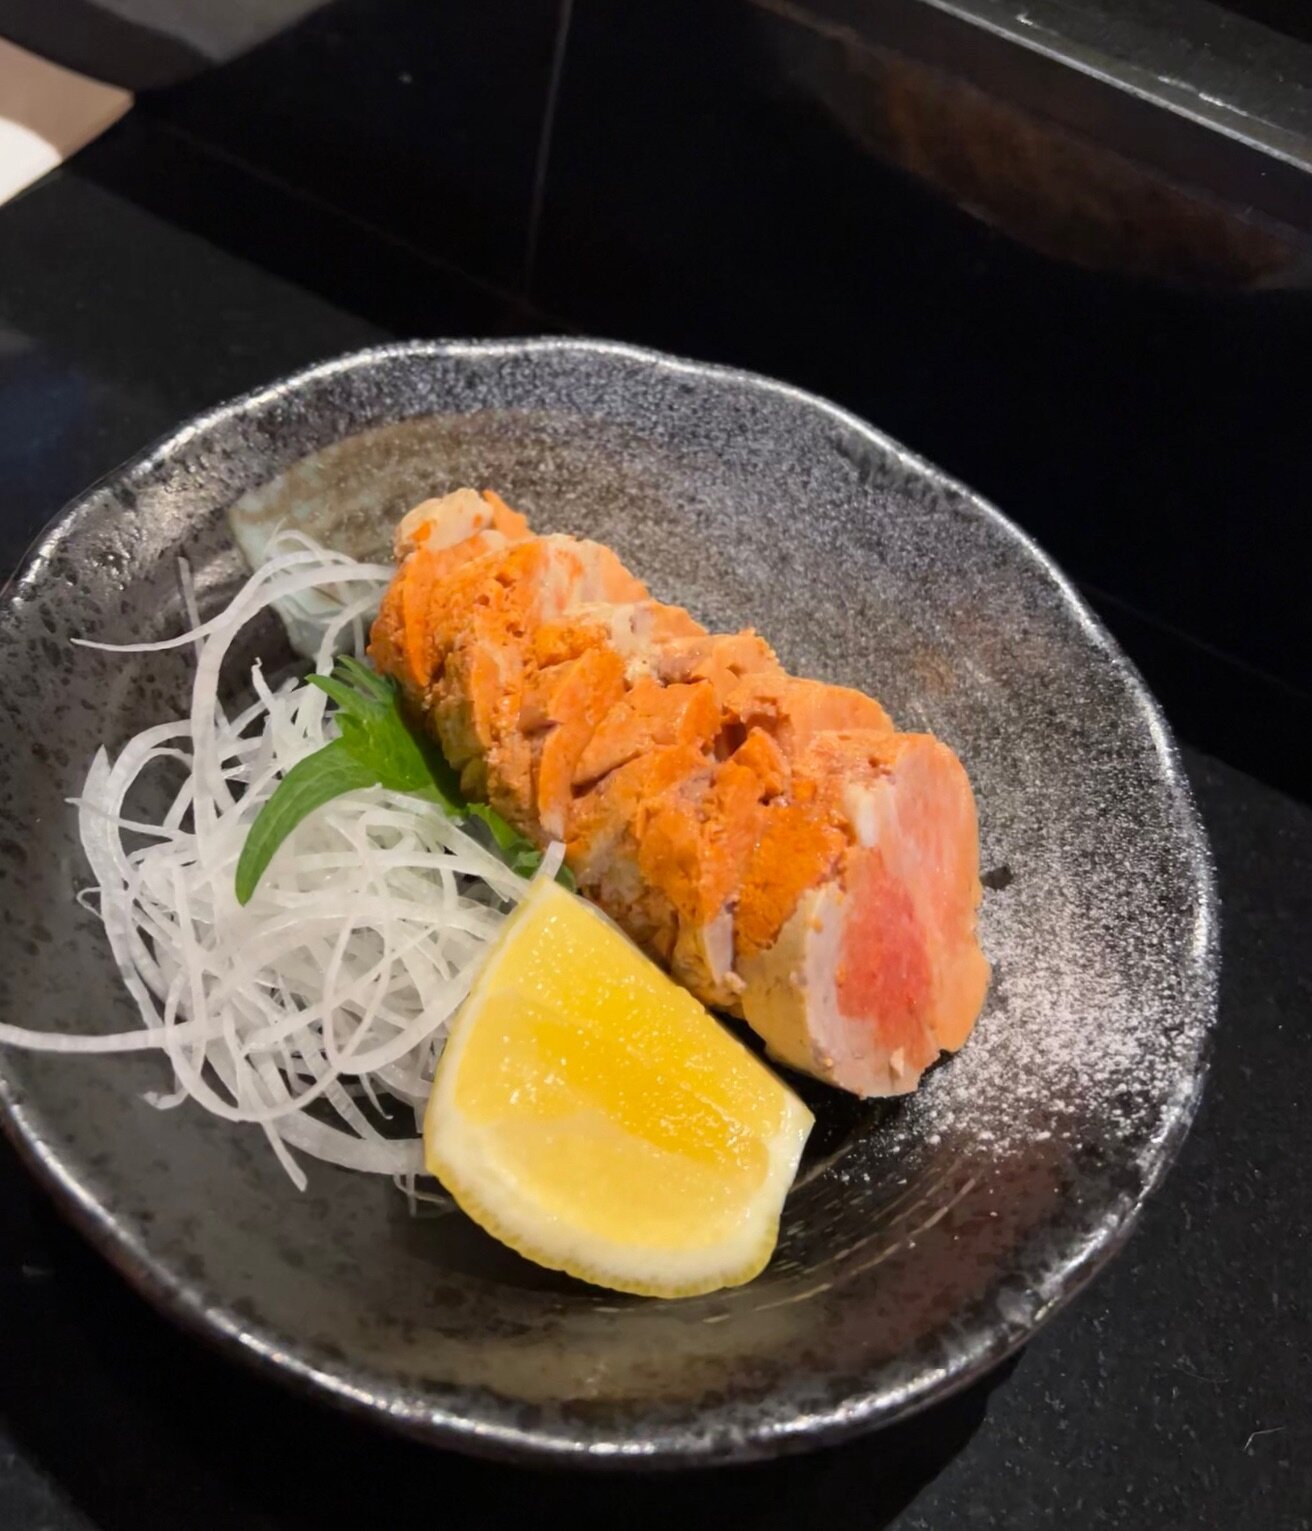 Ankimo - monkfish liver! Widen your tastebuds and give it a try! You will love it :) 
&bull;
&bull;
&bull;
#ankimo #sushi #delicious #deliciousfood #sushilovers #sashimi #sashimilover #sushibar #freshsushi #redgingersushi #woodlandhillsca